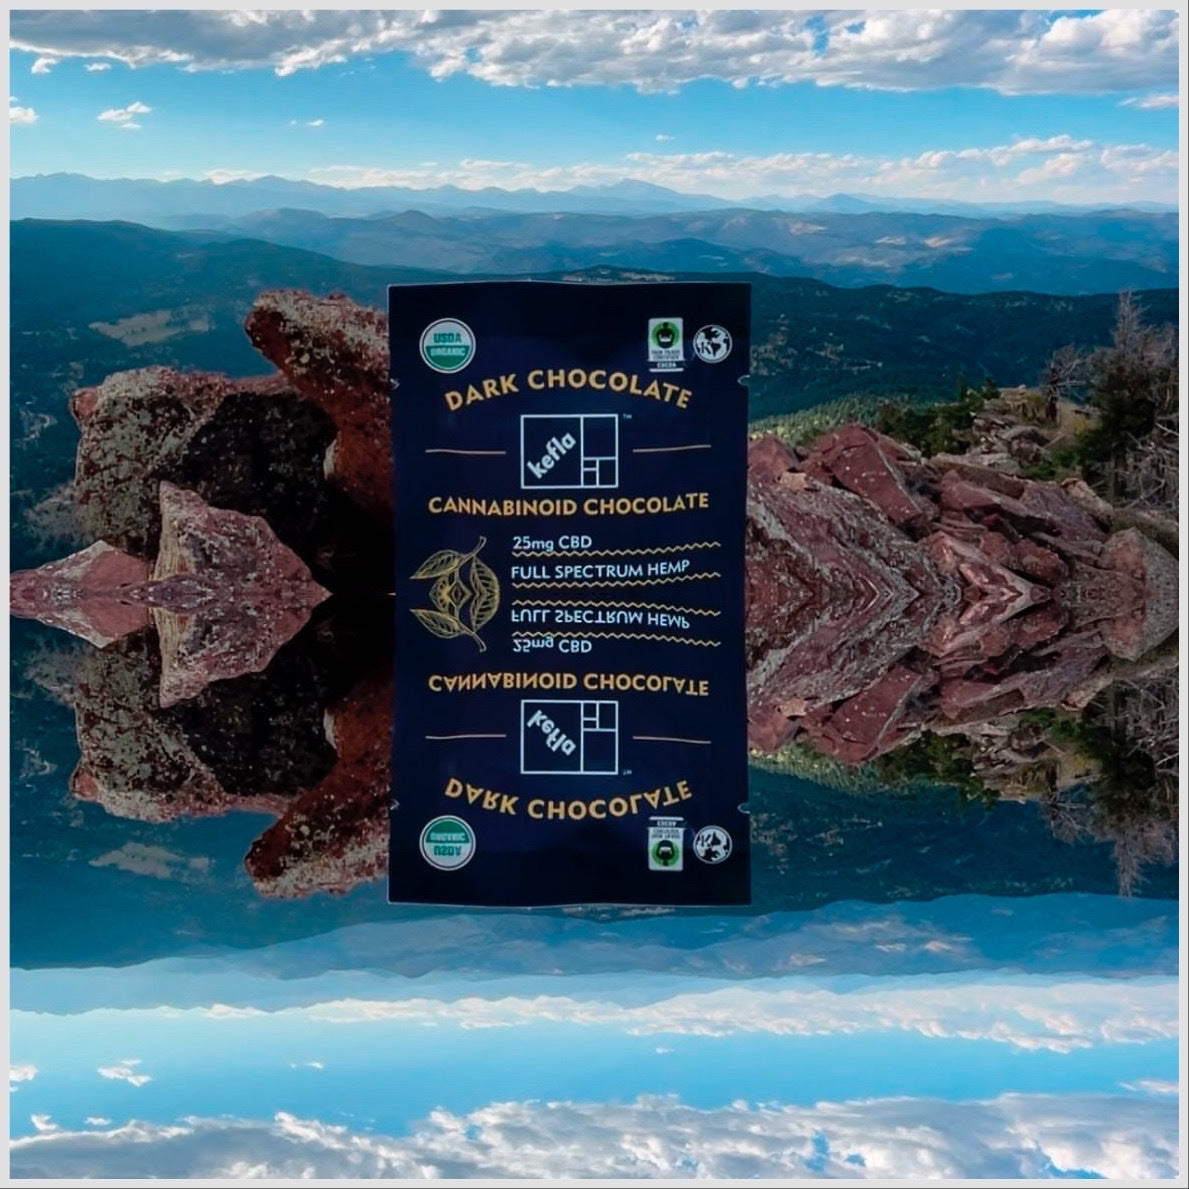 Hemp cannabinoid chocolate bar with mountainous background